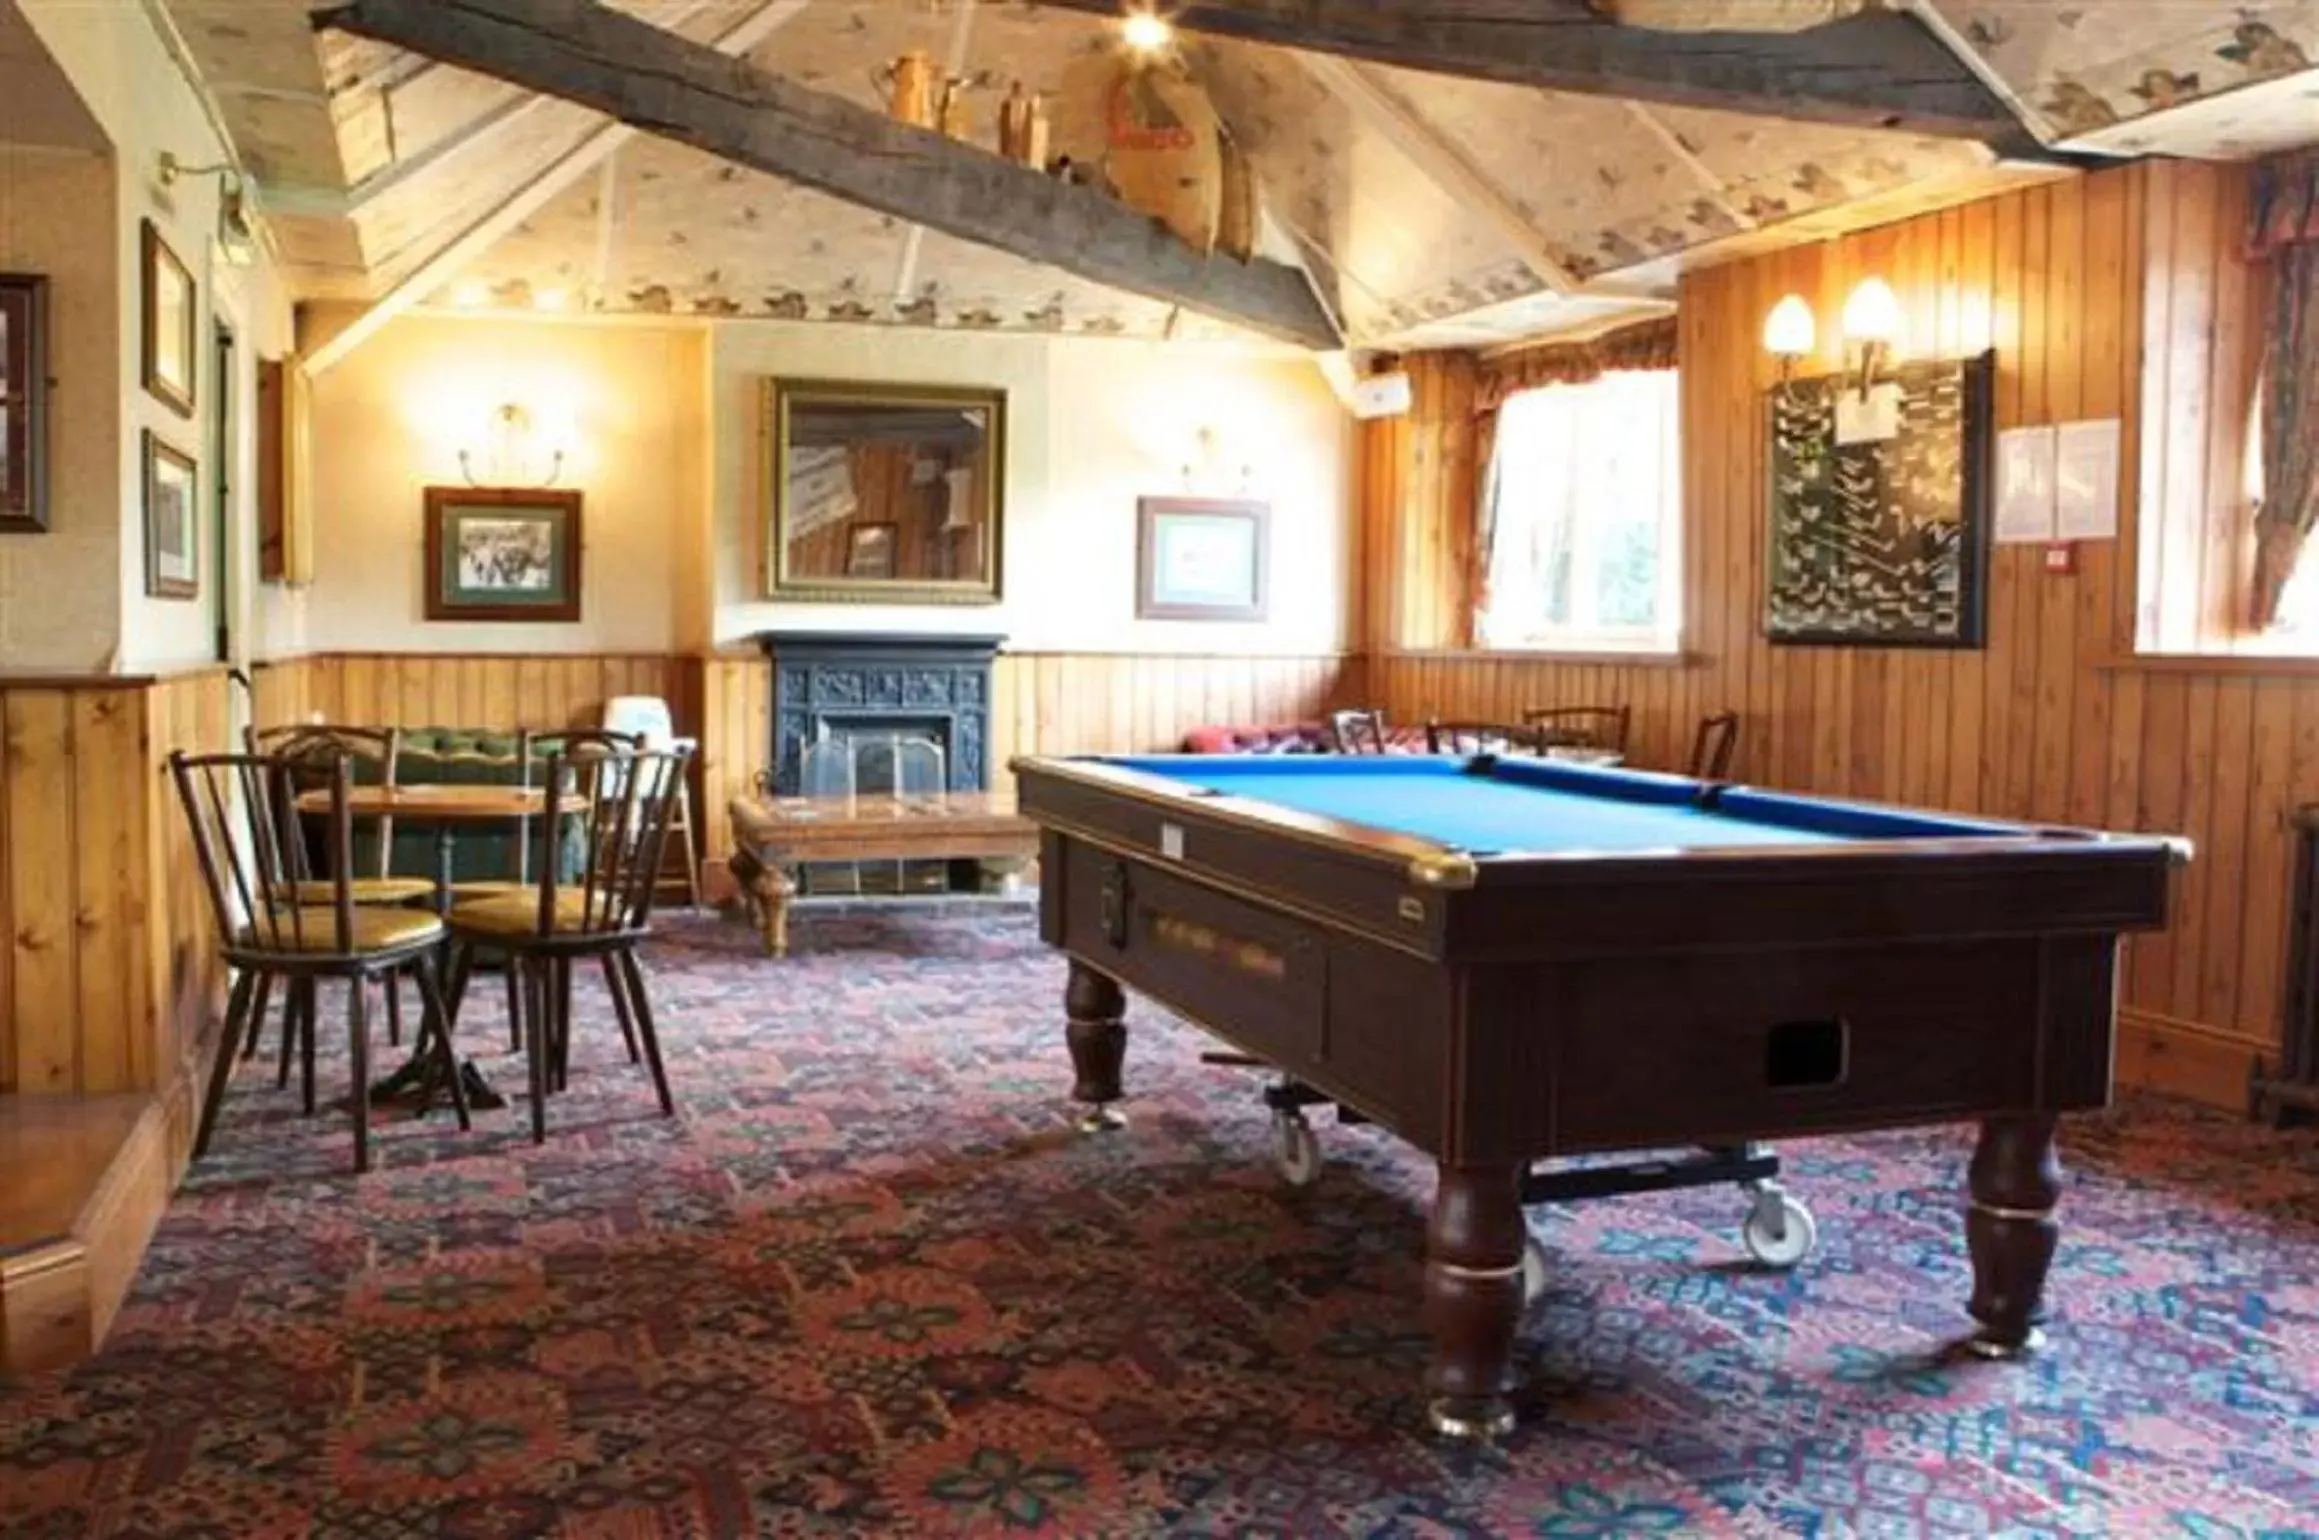 Game Room, Billiards in Radstock Hotel near Bath